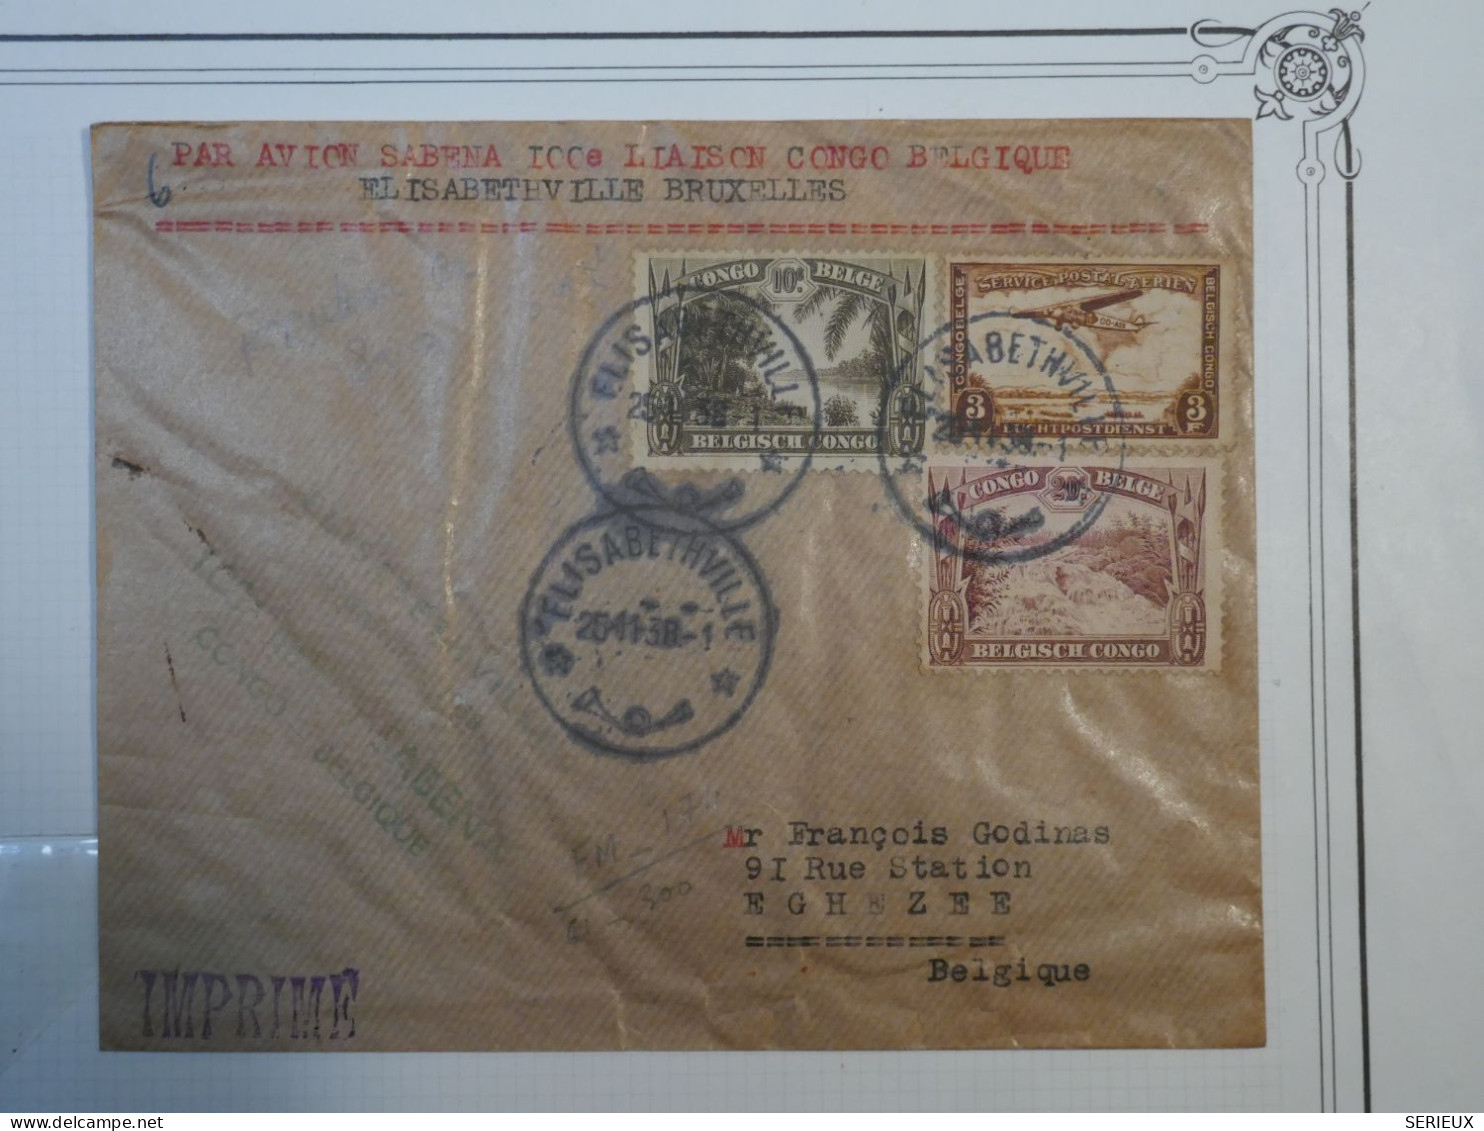 C CONGO BELGE BELLE  LETTRE RR +1938 1ER VOL AVION. SABENA+ELISABETHVILLE A EGHESEE BELGIQUE ++ AFFR. INTERESSANT+++ + - Brieven En Documenten